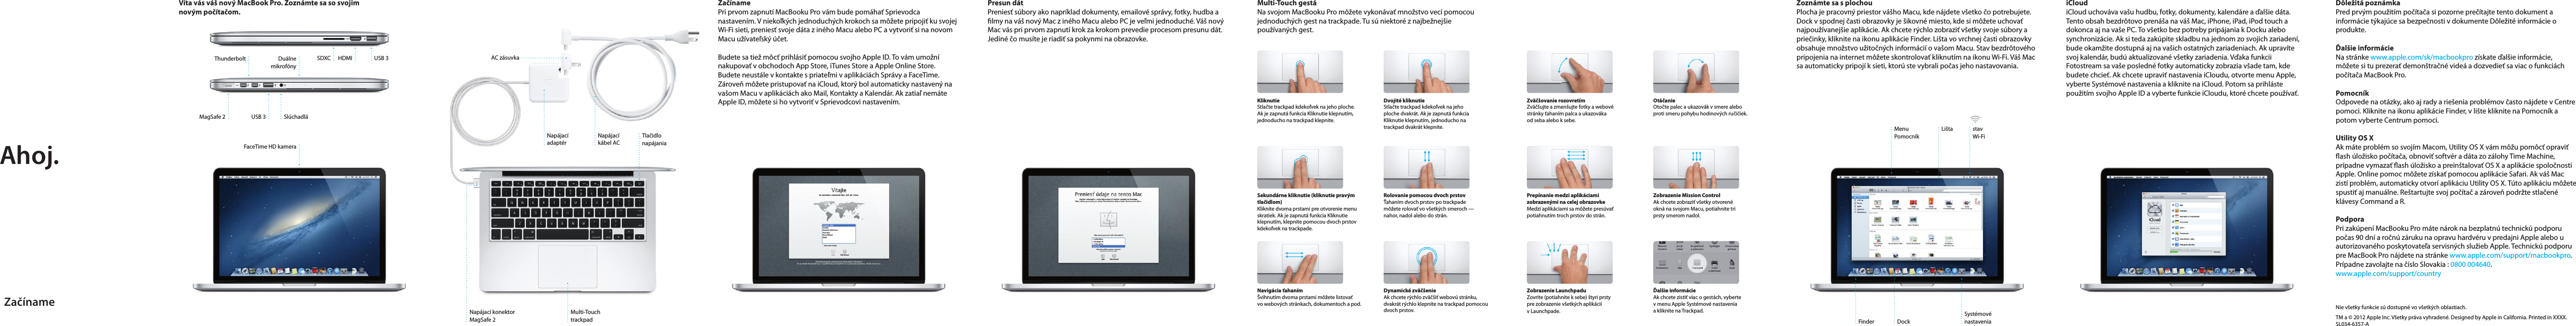 apple macbook pro user manual 2013